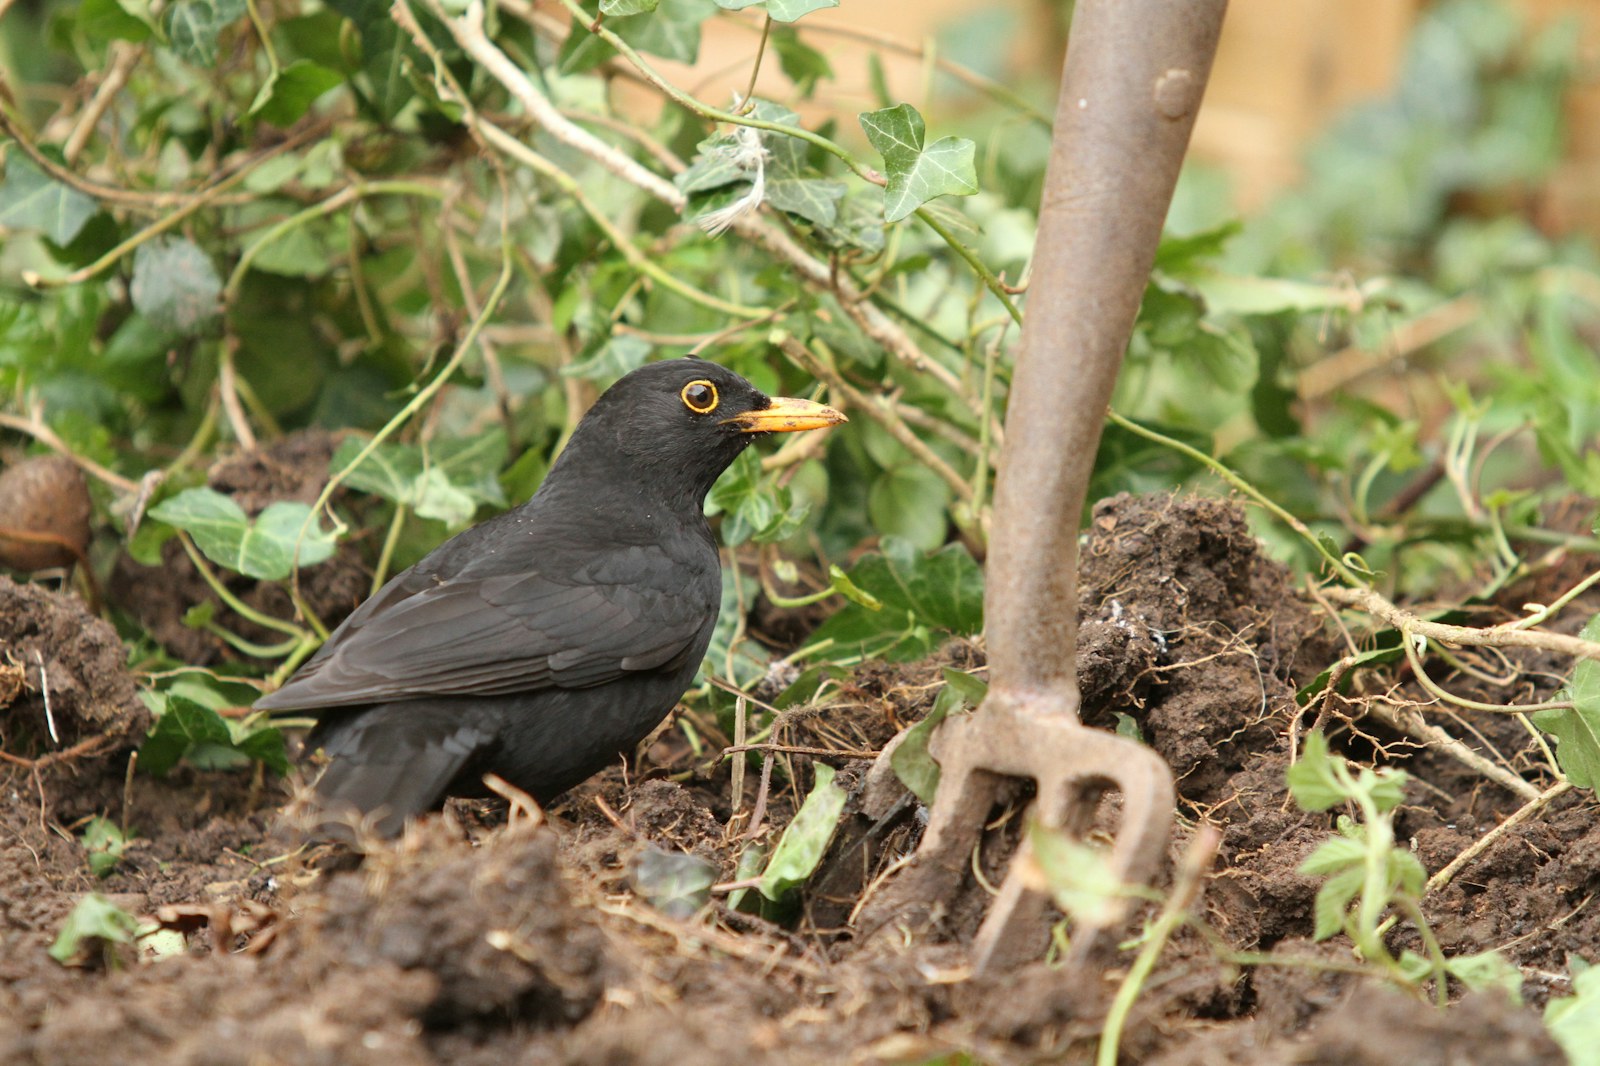 Blackbird soil